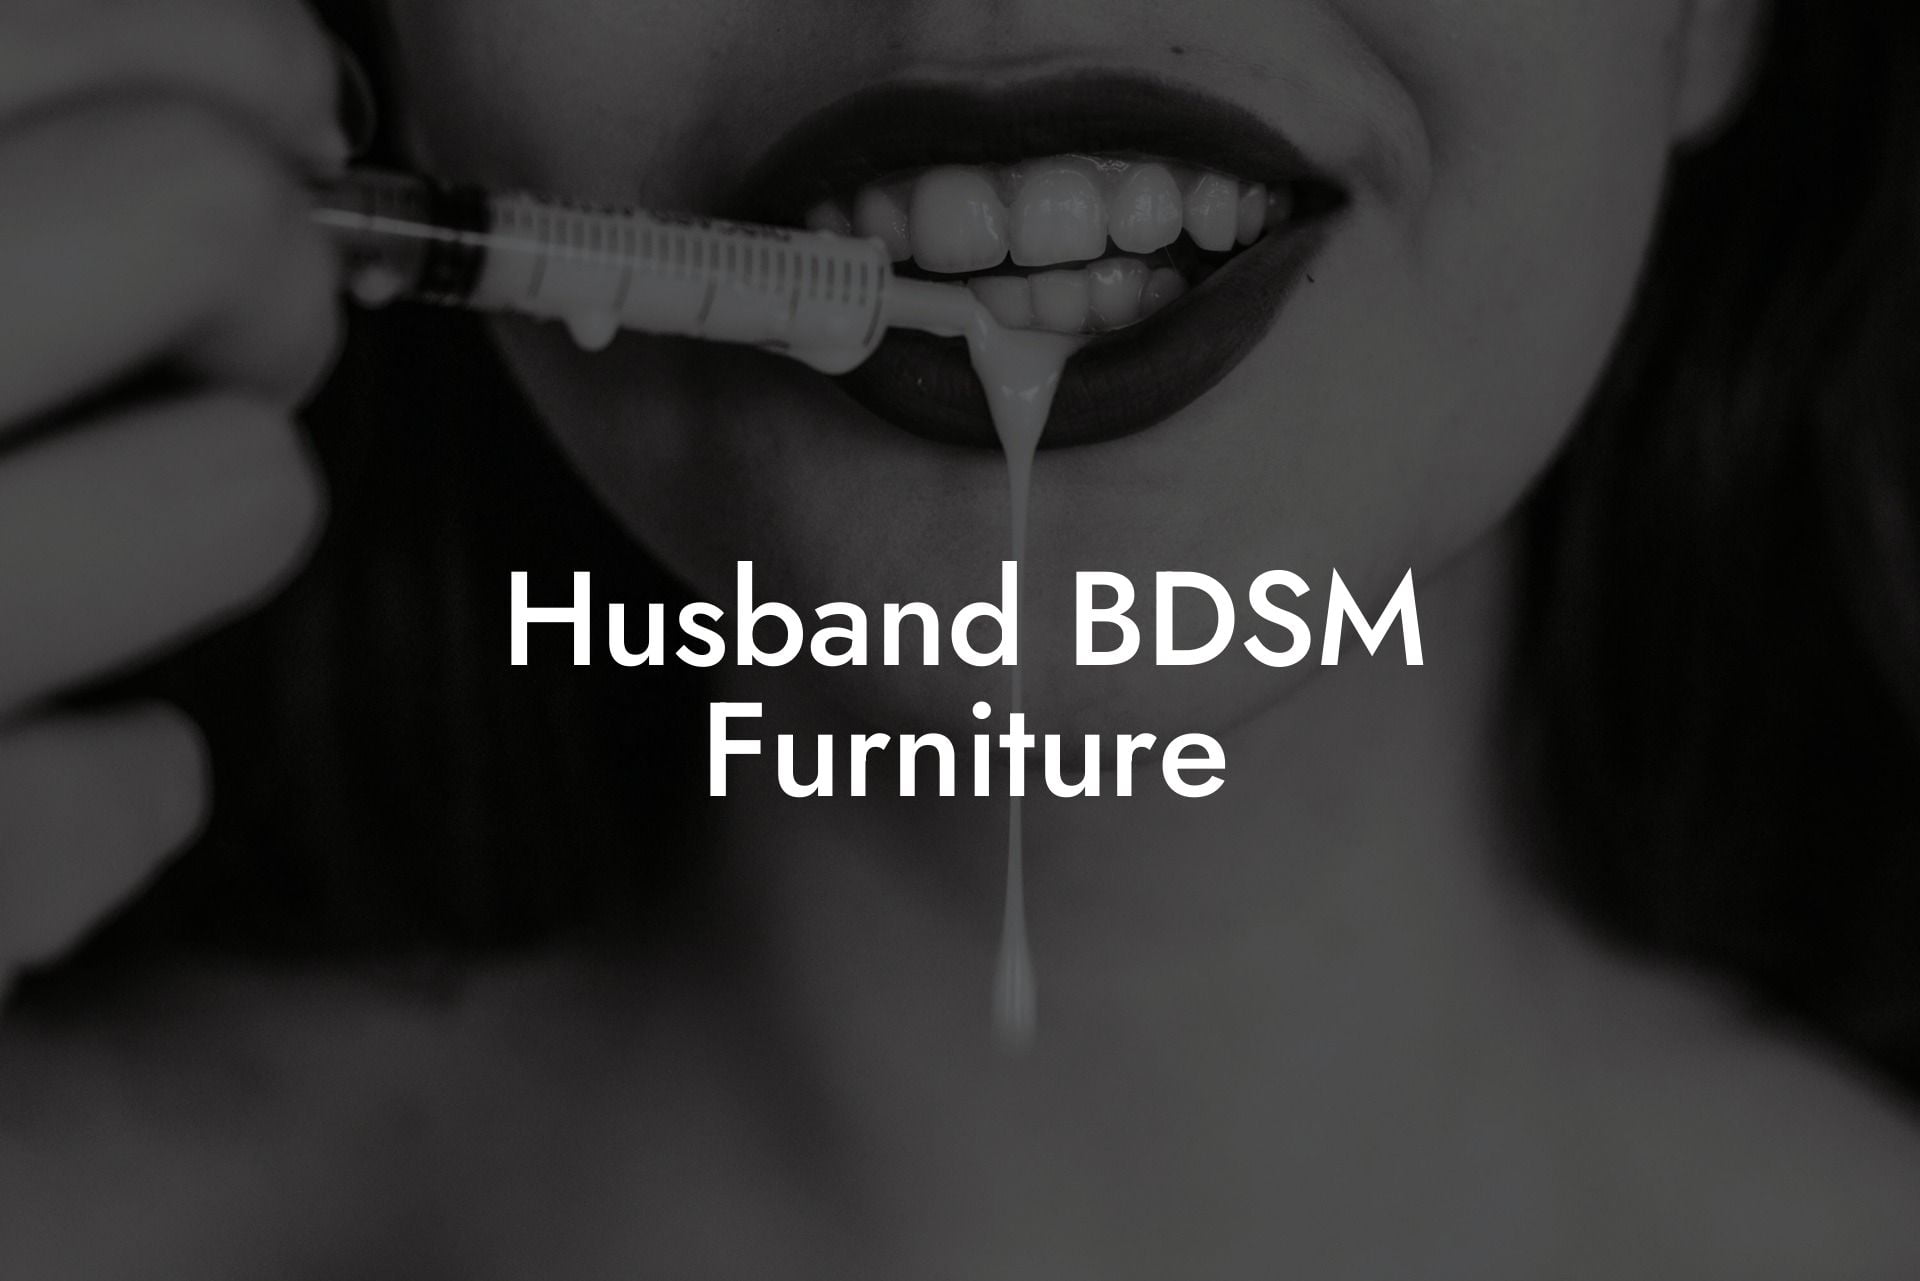 Husband BDSM Furniture